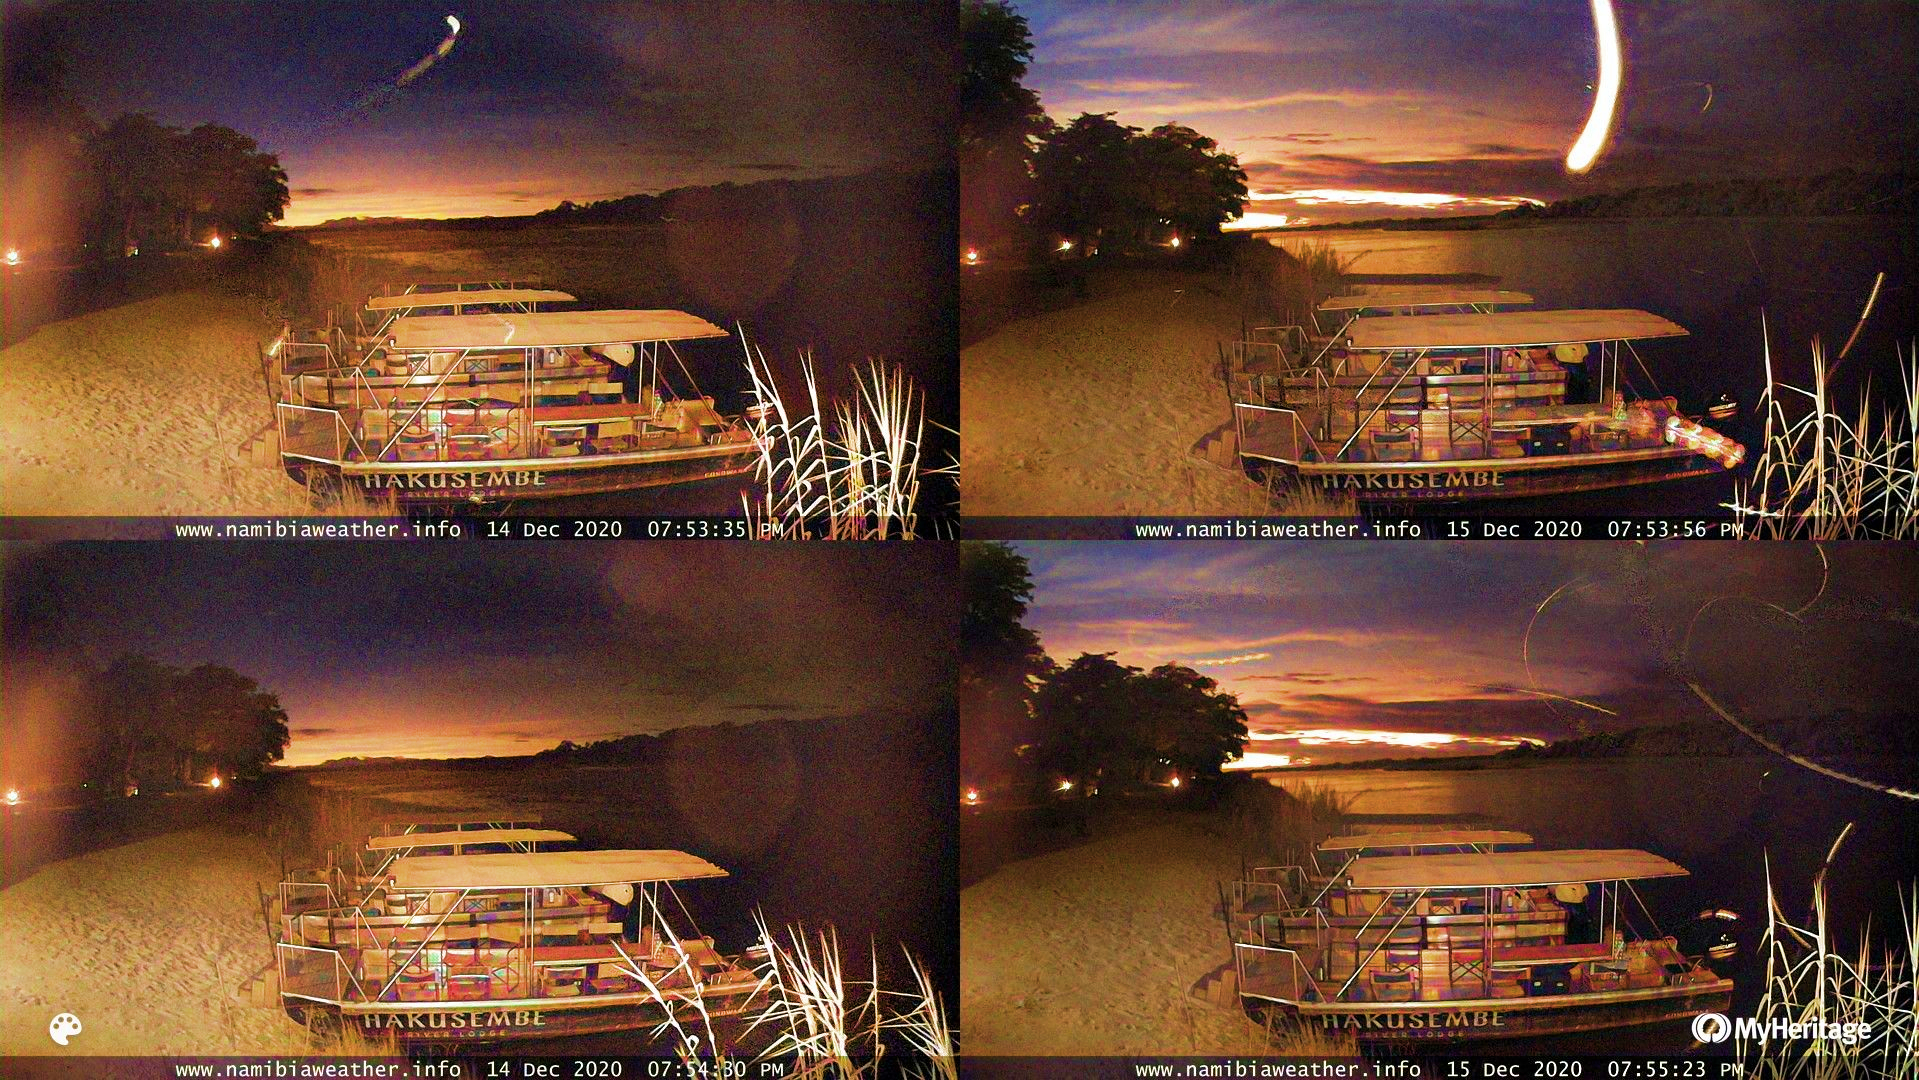 Hakusembe River Lodge webcam solar eclipse below the horizon 2020 4